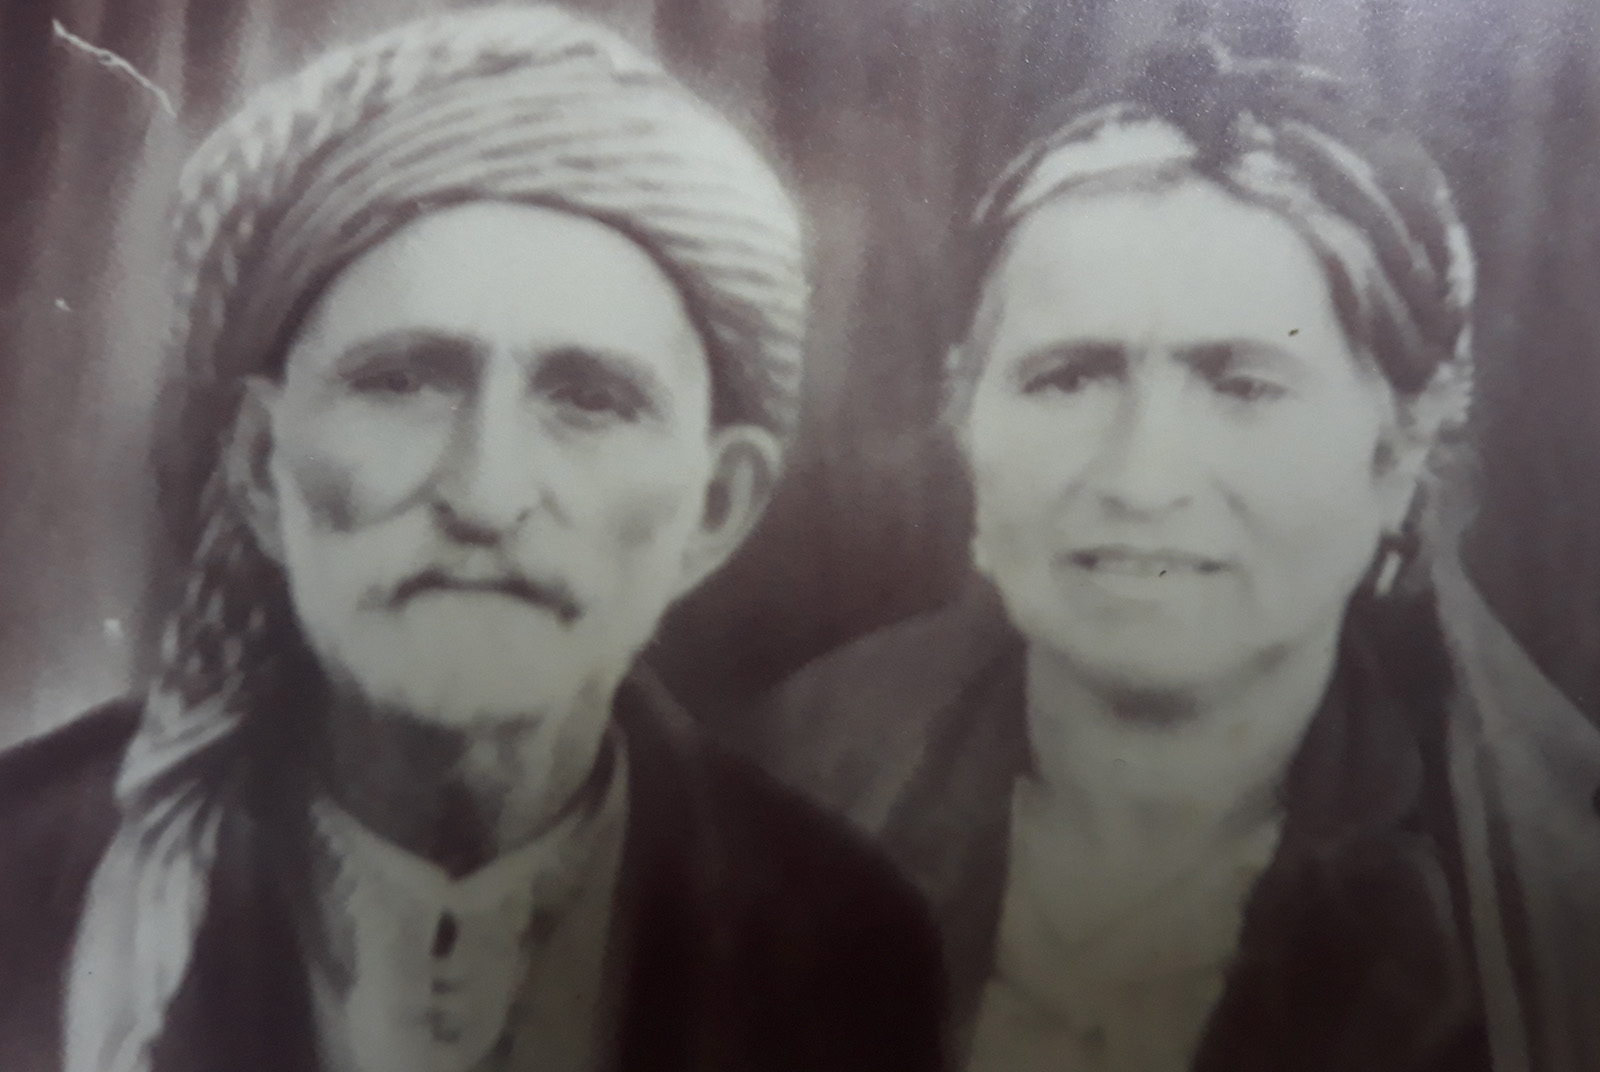 Saida and Moshe Barzani, the parents of Maurice Bar-On. (Photo: Private album).